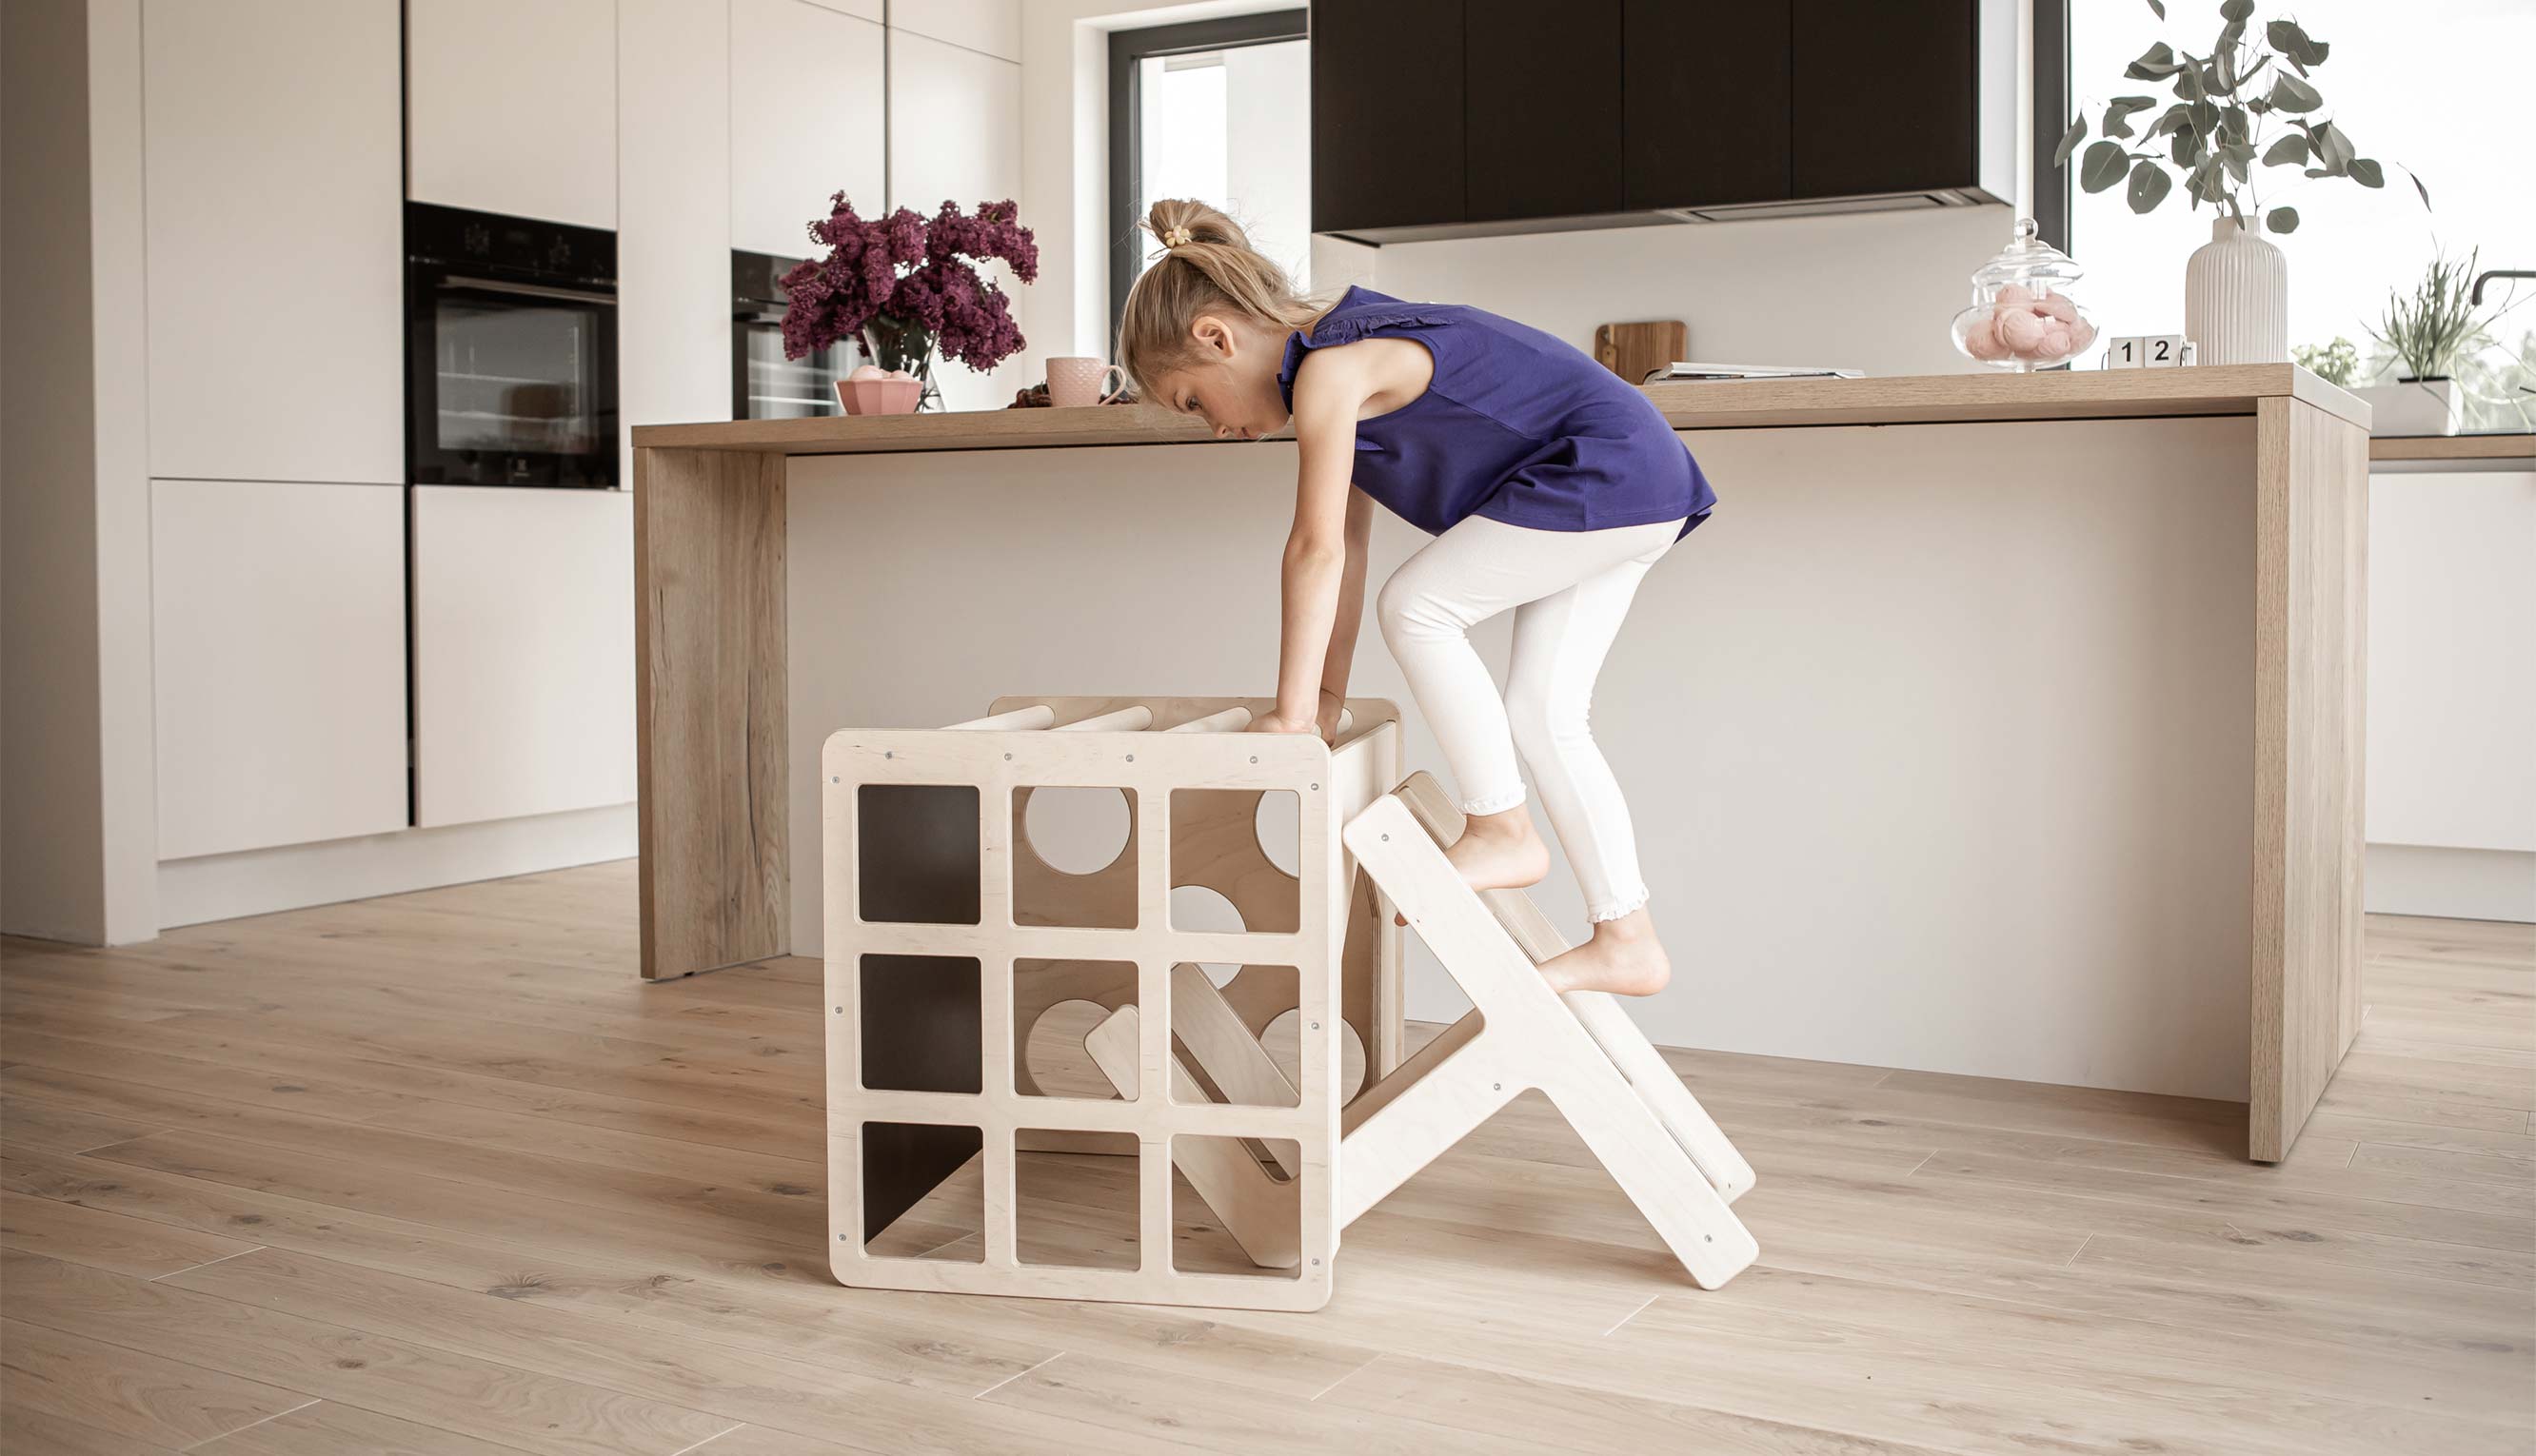 A little girl climbing on a wooden ladder in a kitchen.